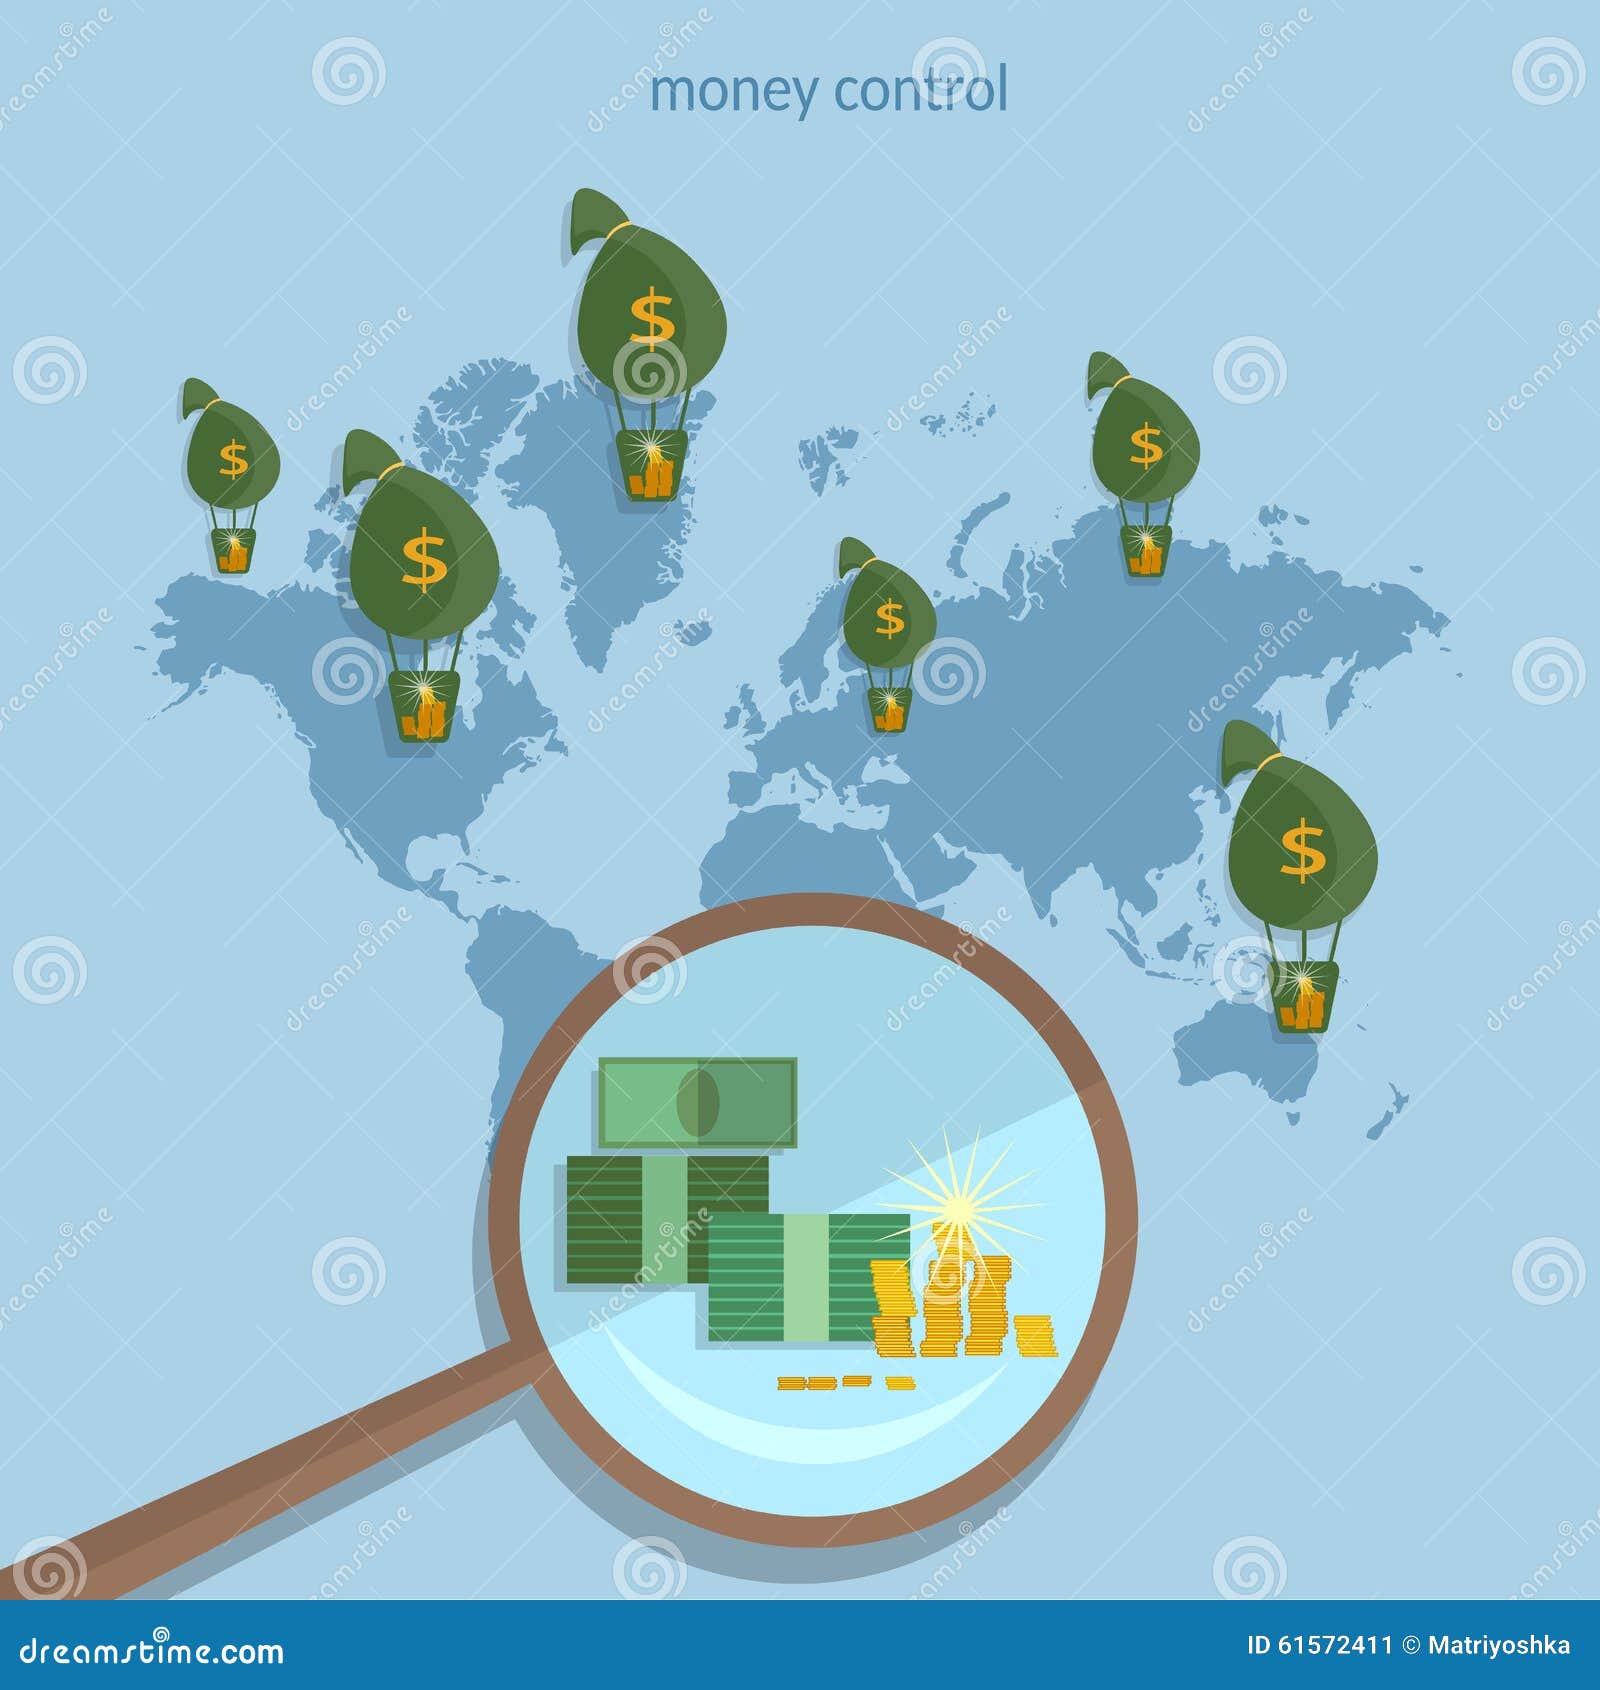 world money traffic concept global monetary system transactions